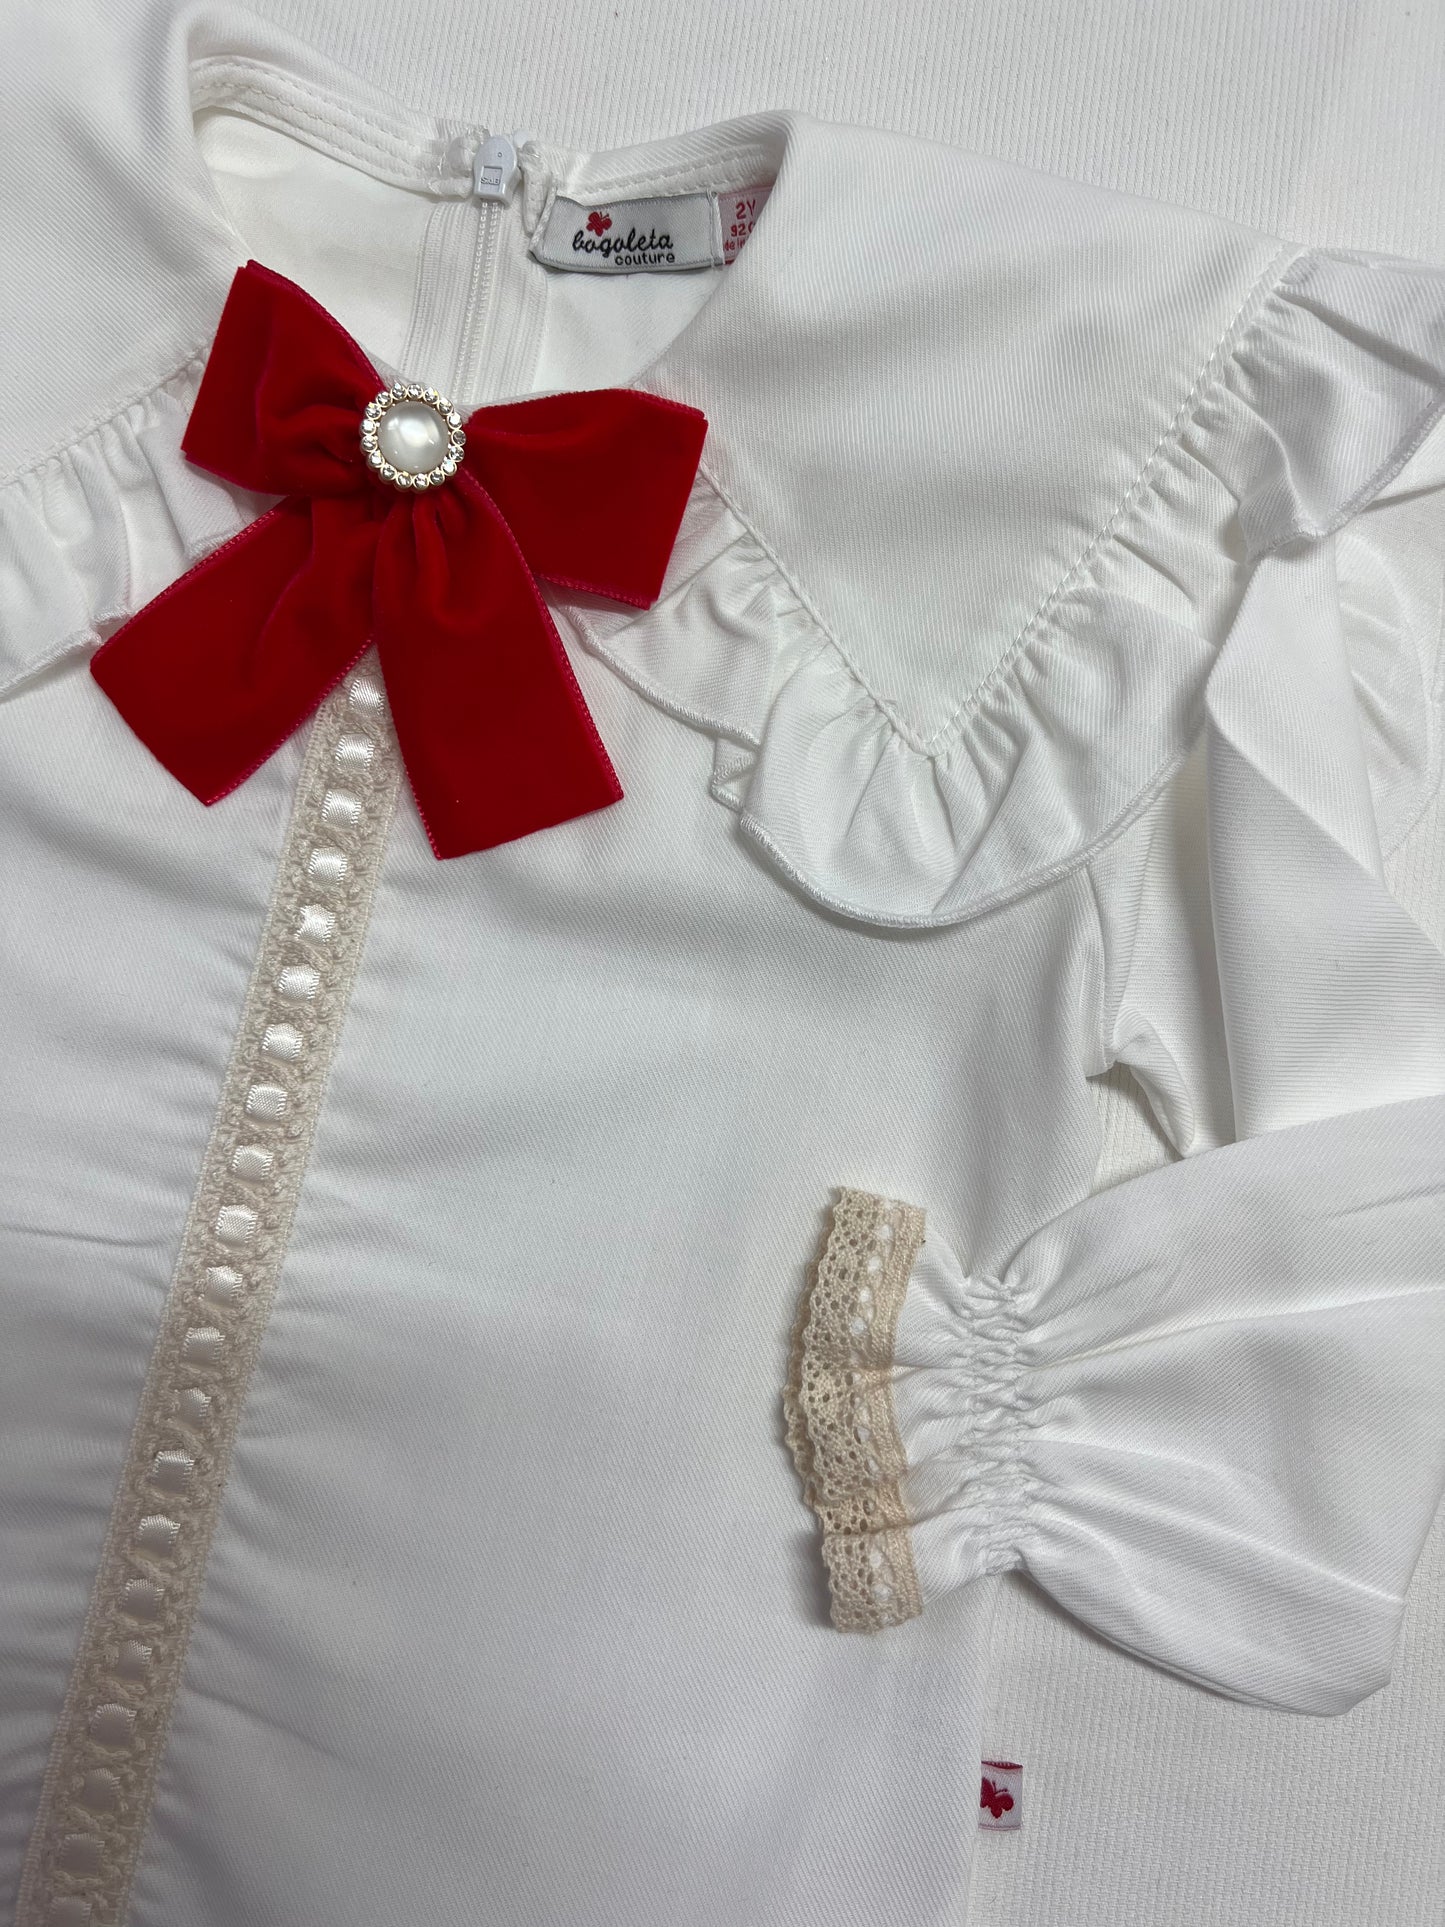 Ties to apply to sailor shirts